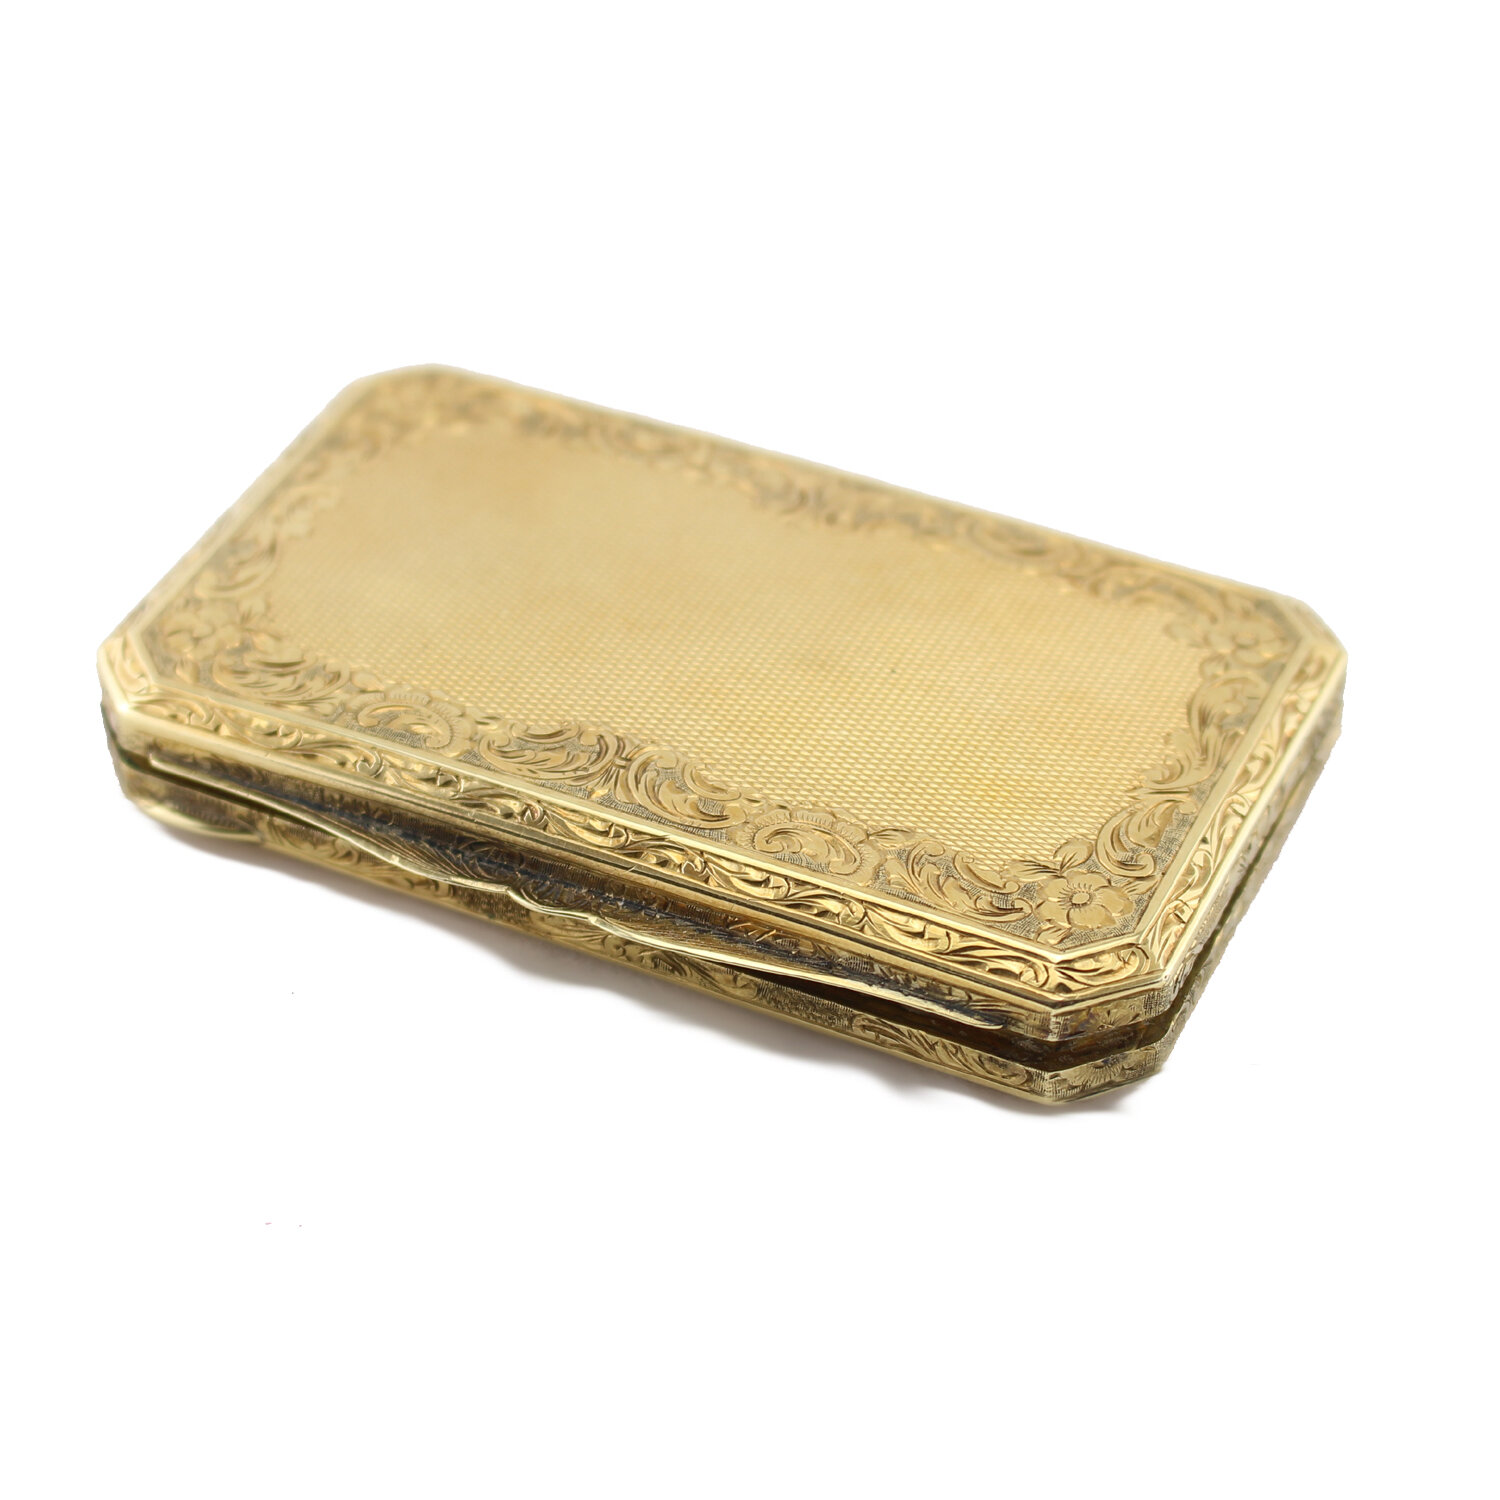 European Gold Snuff Box, Around 1900